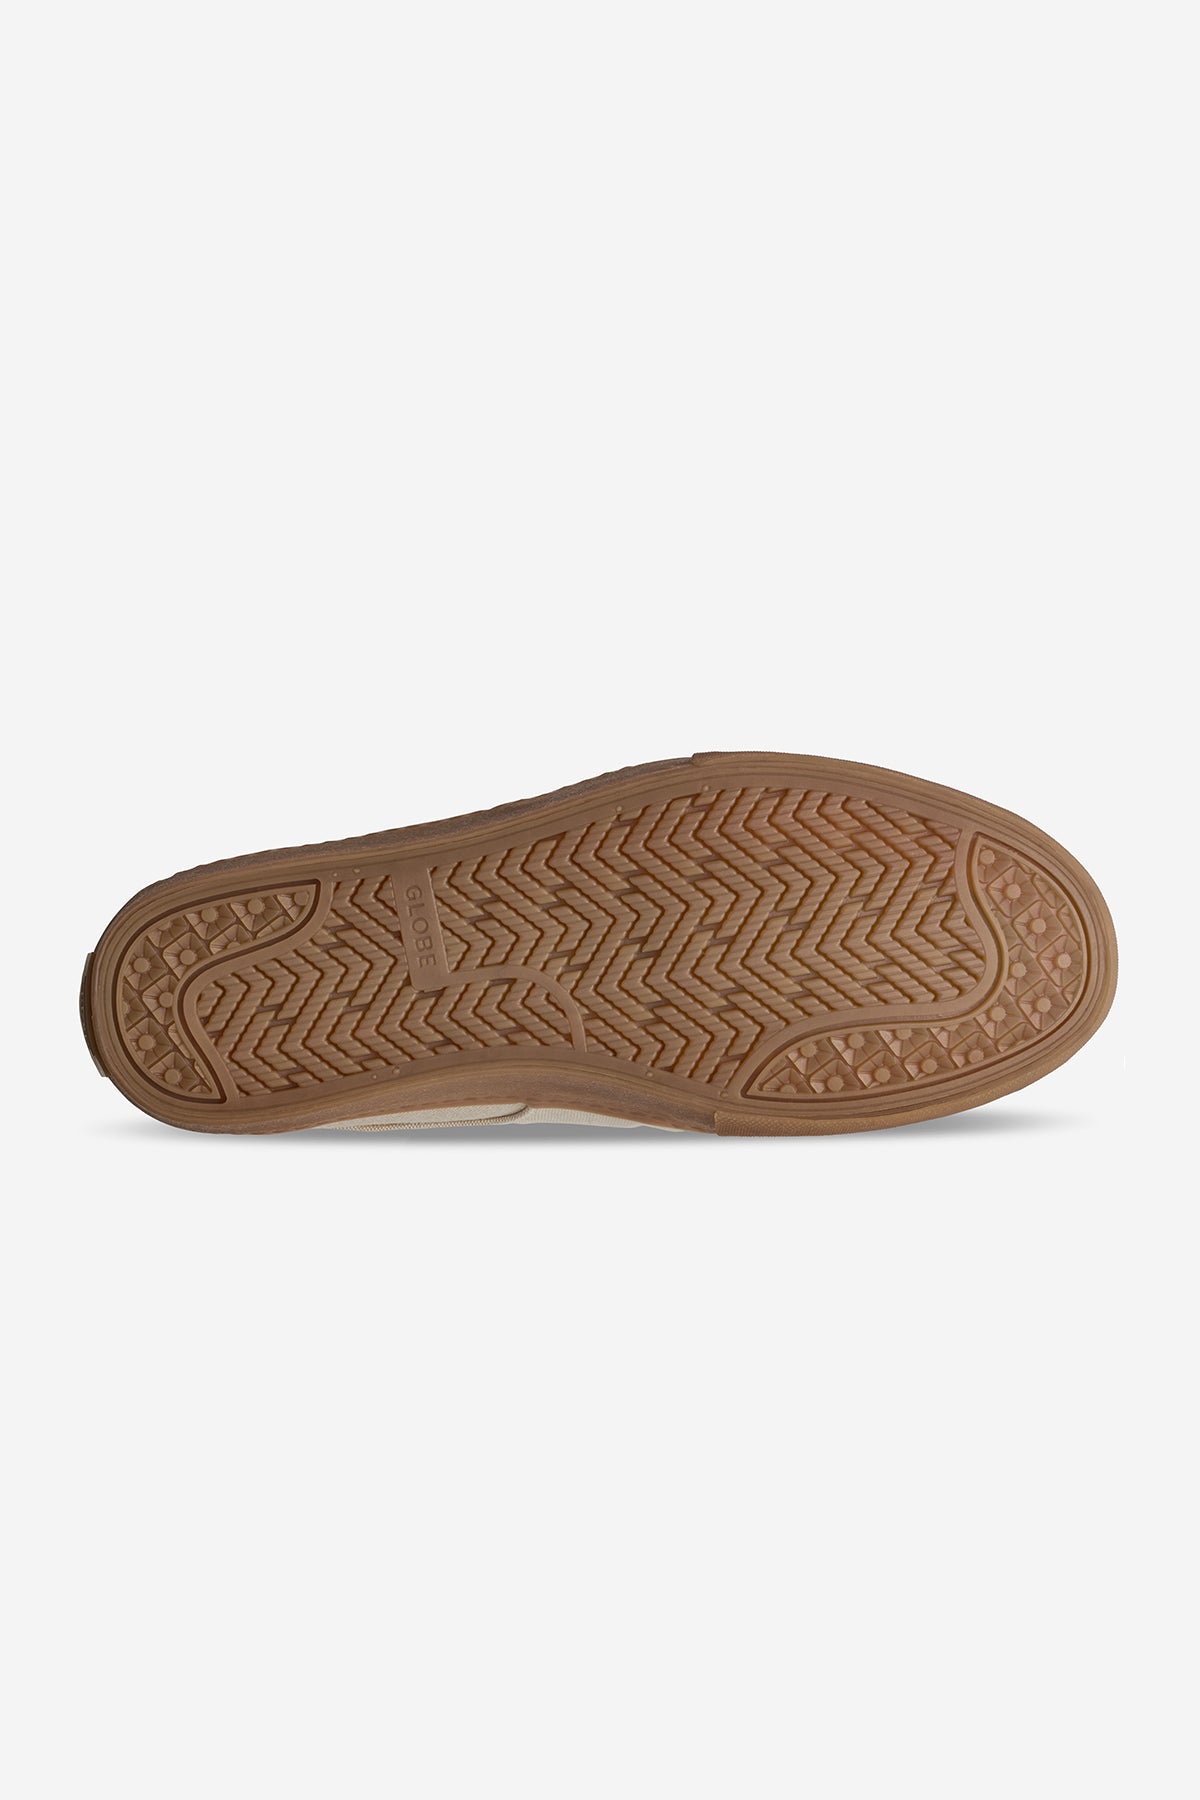 liaizon hemp regrind gum skateboard shoes